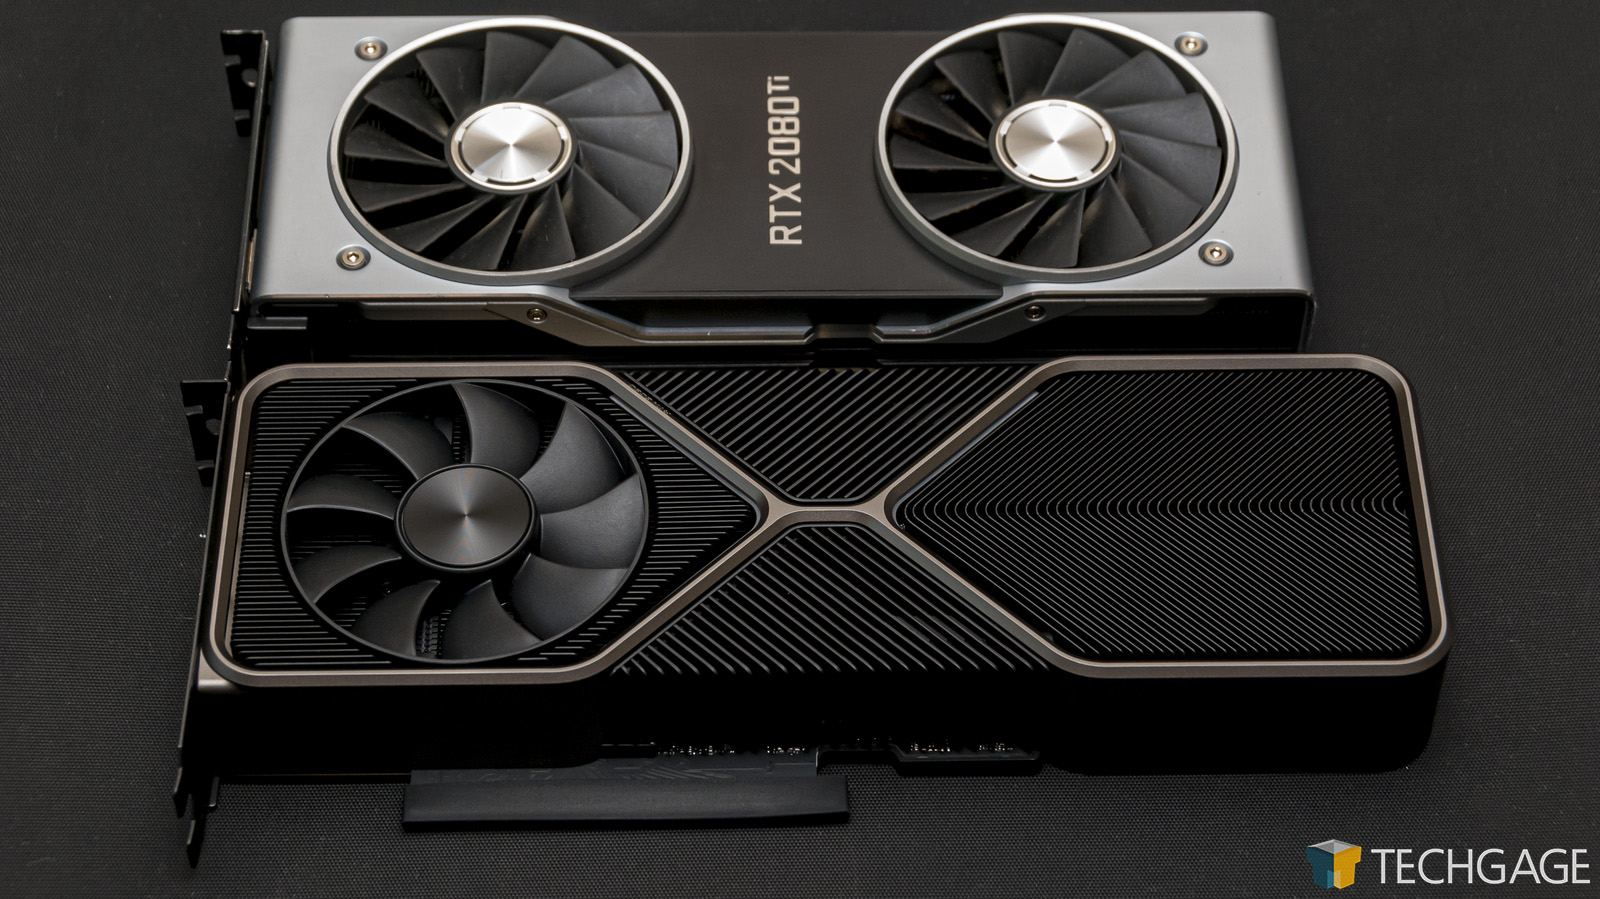 NVIDIA GeForce RTX 3080 Performance Blender, Octane, V-Ray, & More – Techgage